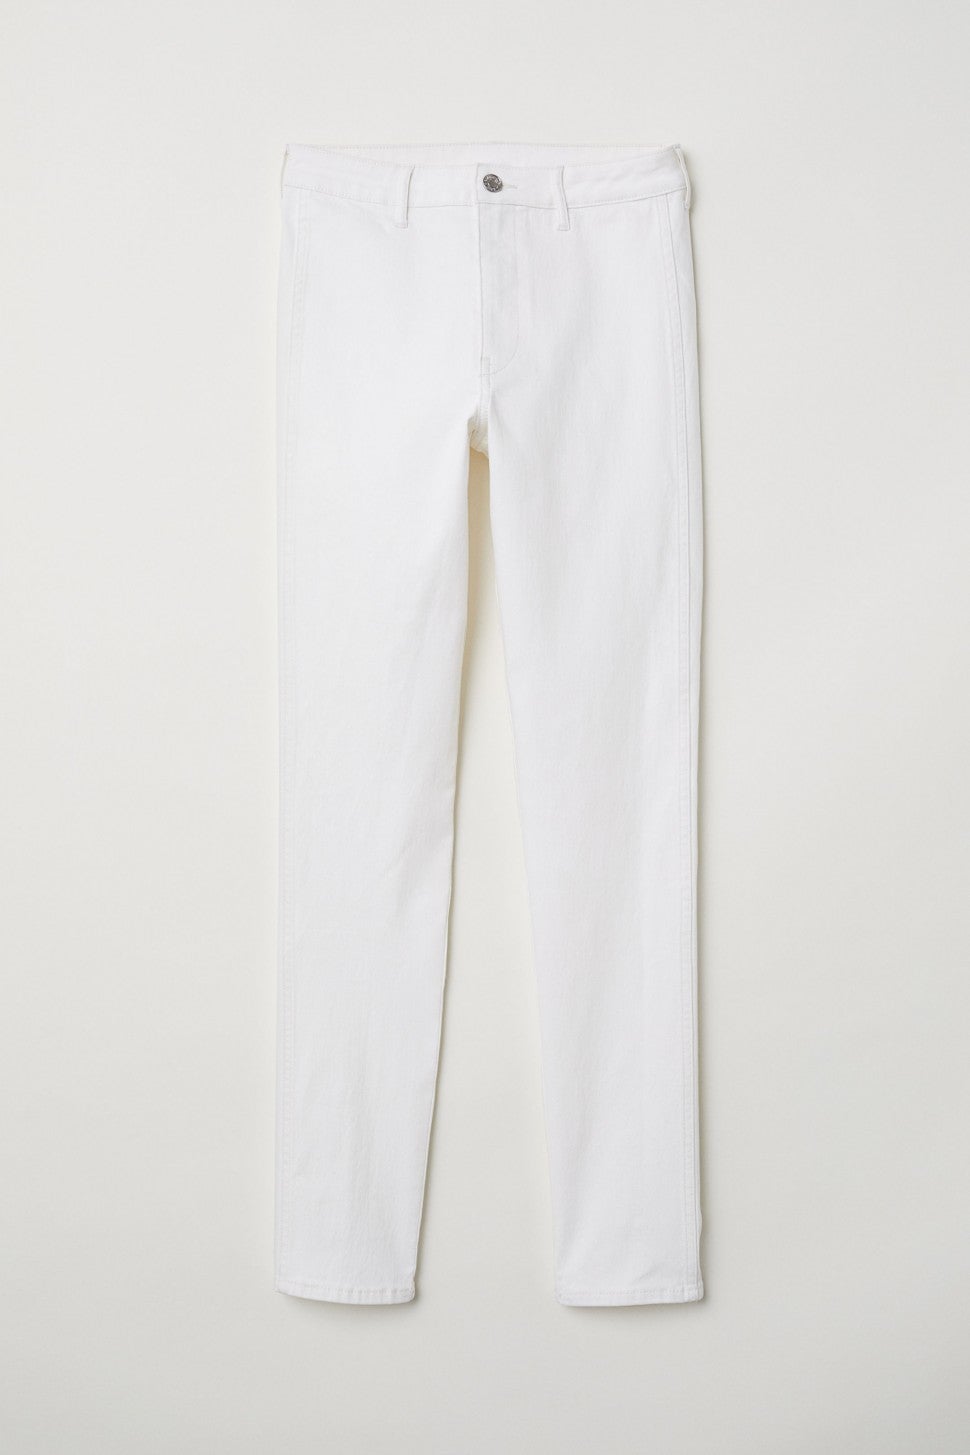 H&M white skinny jeans